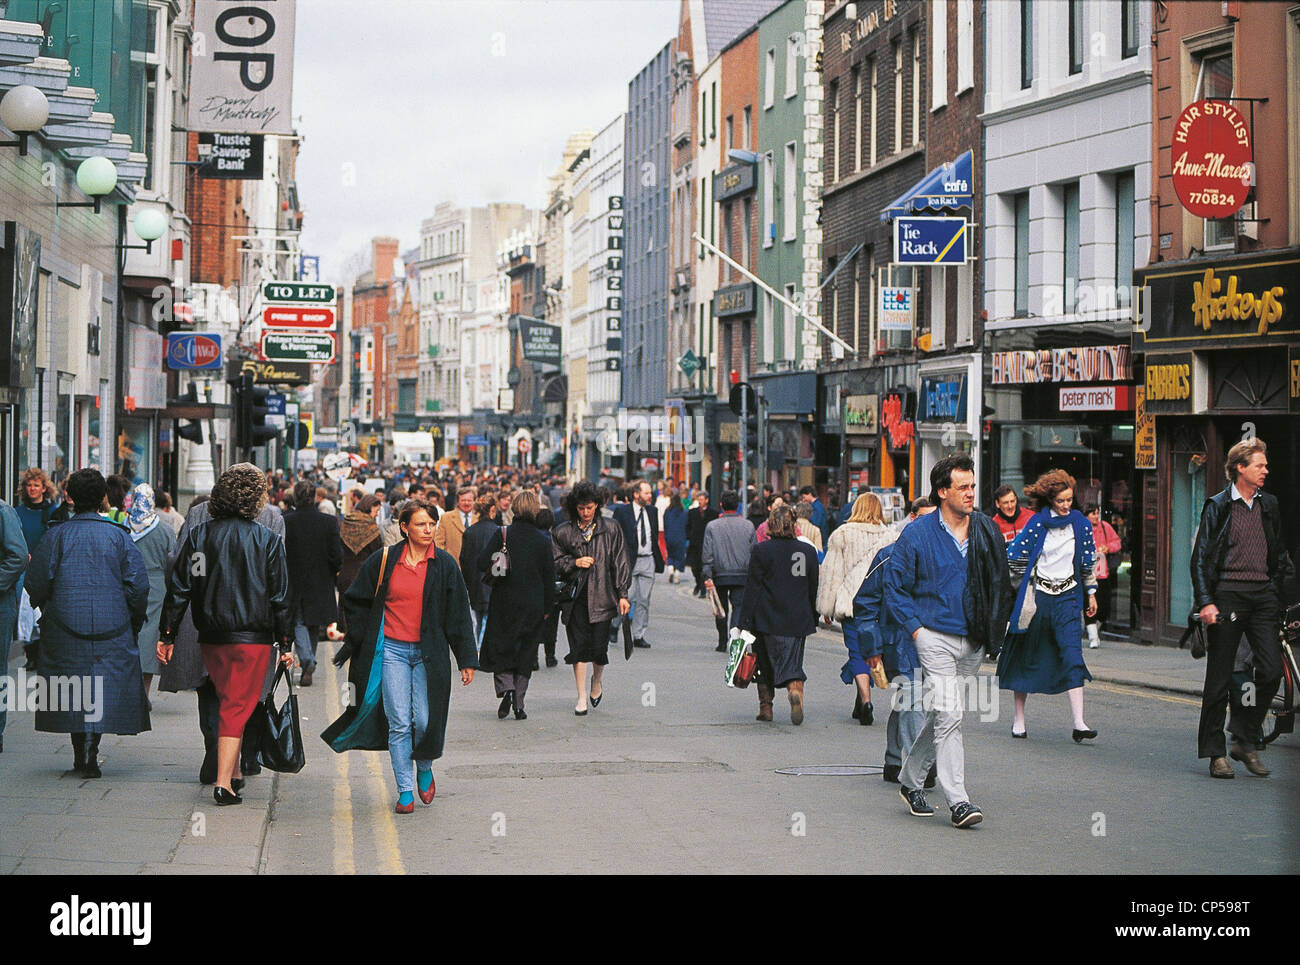 IRELAND DUBLIN LIFE IN Gratton STREET SCENE Stock Photo - Alamy